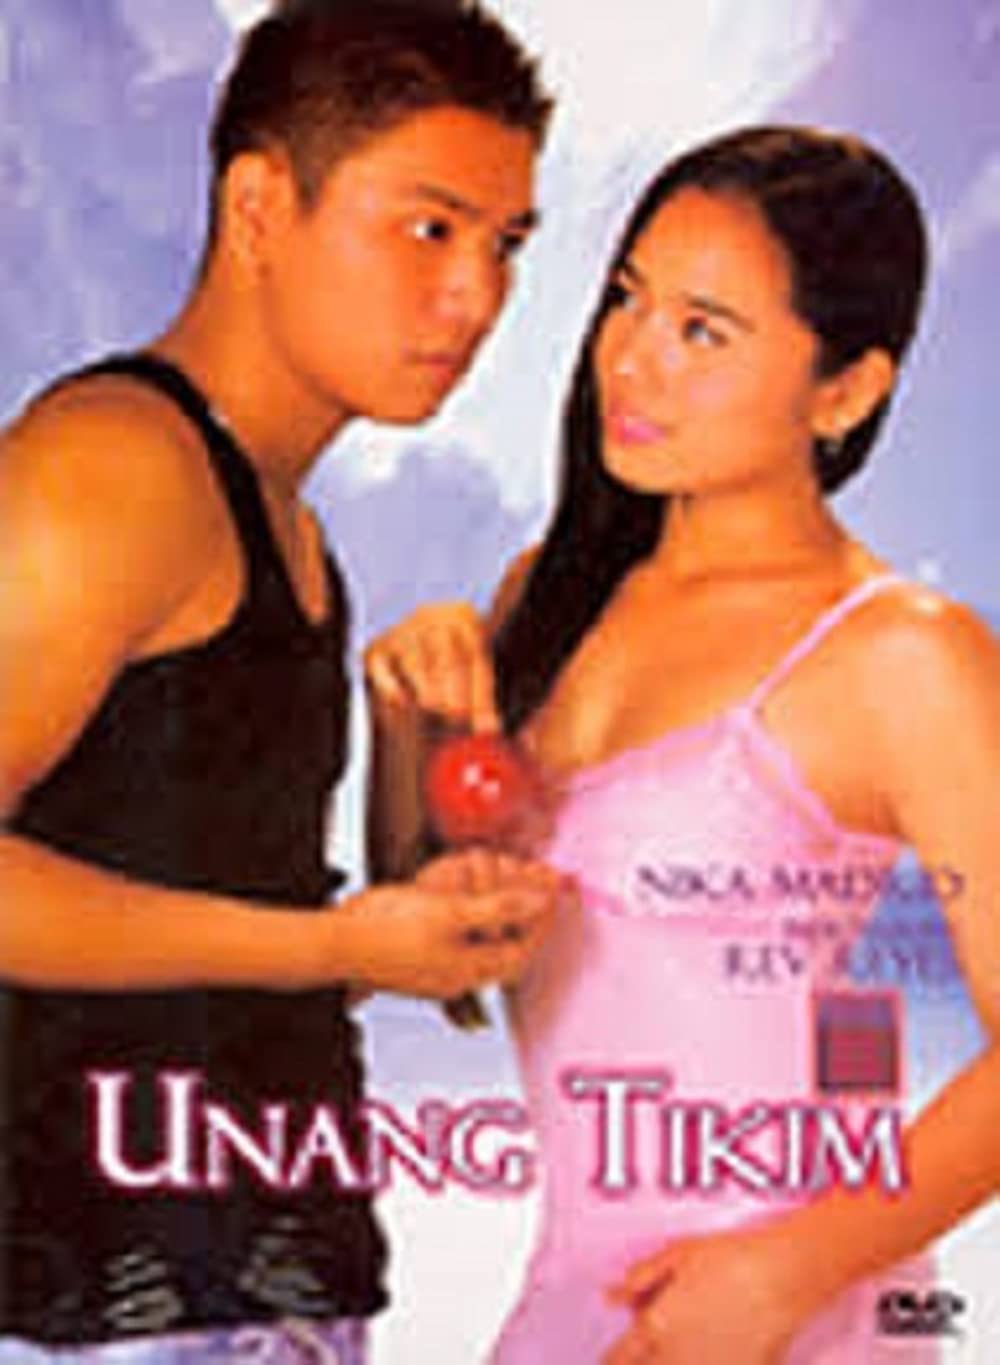 Unang Tikim 2006 movie poster 1